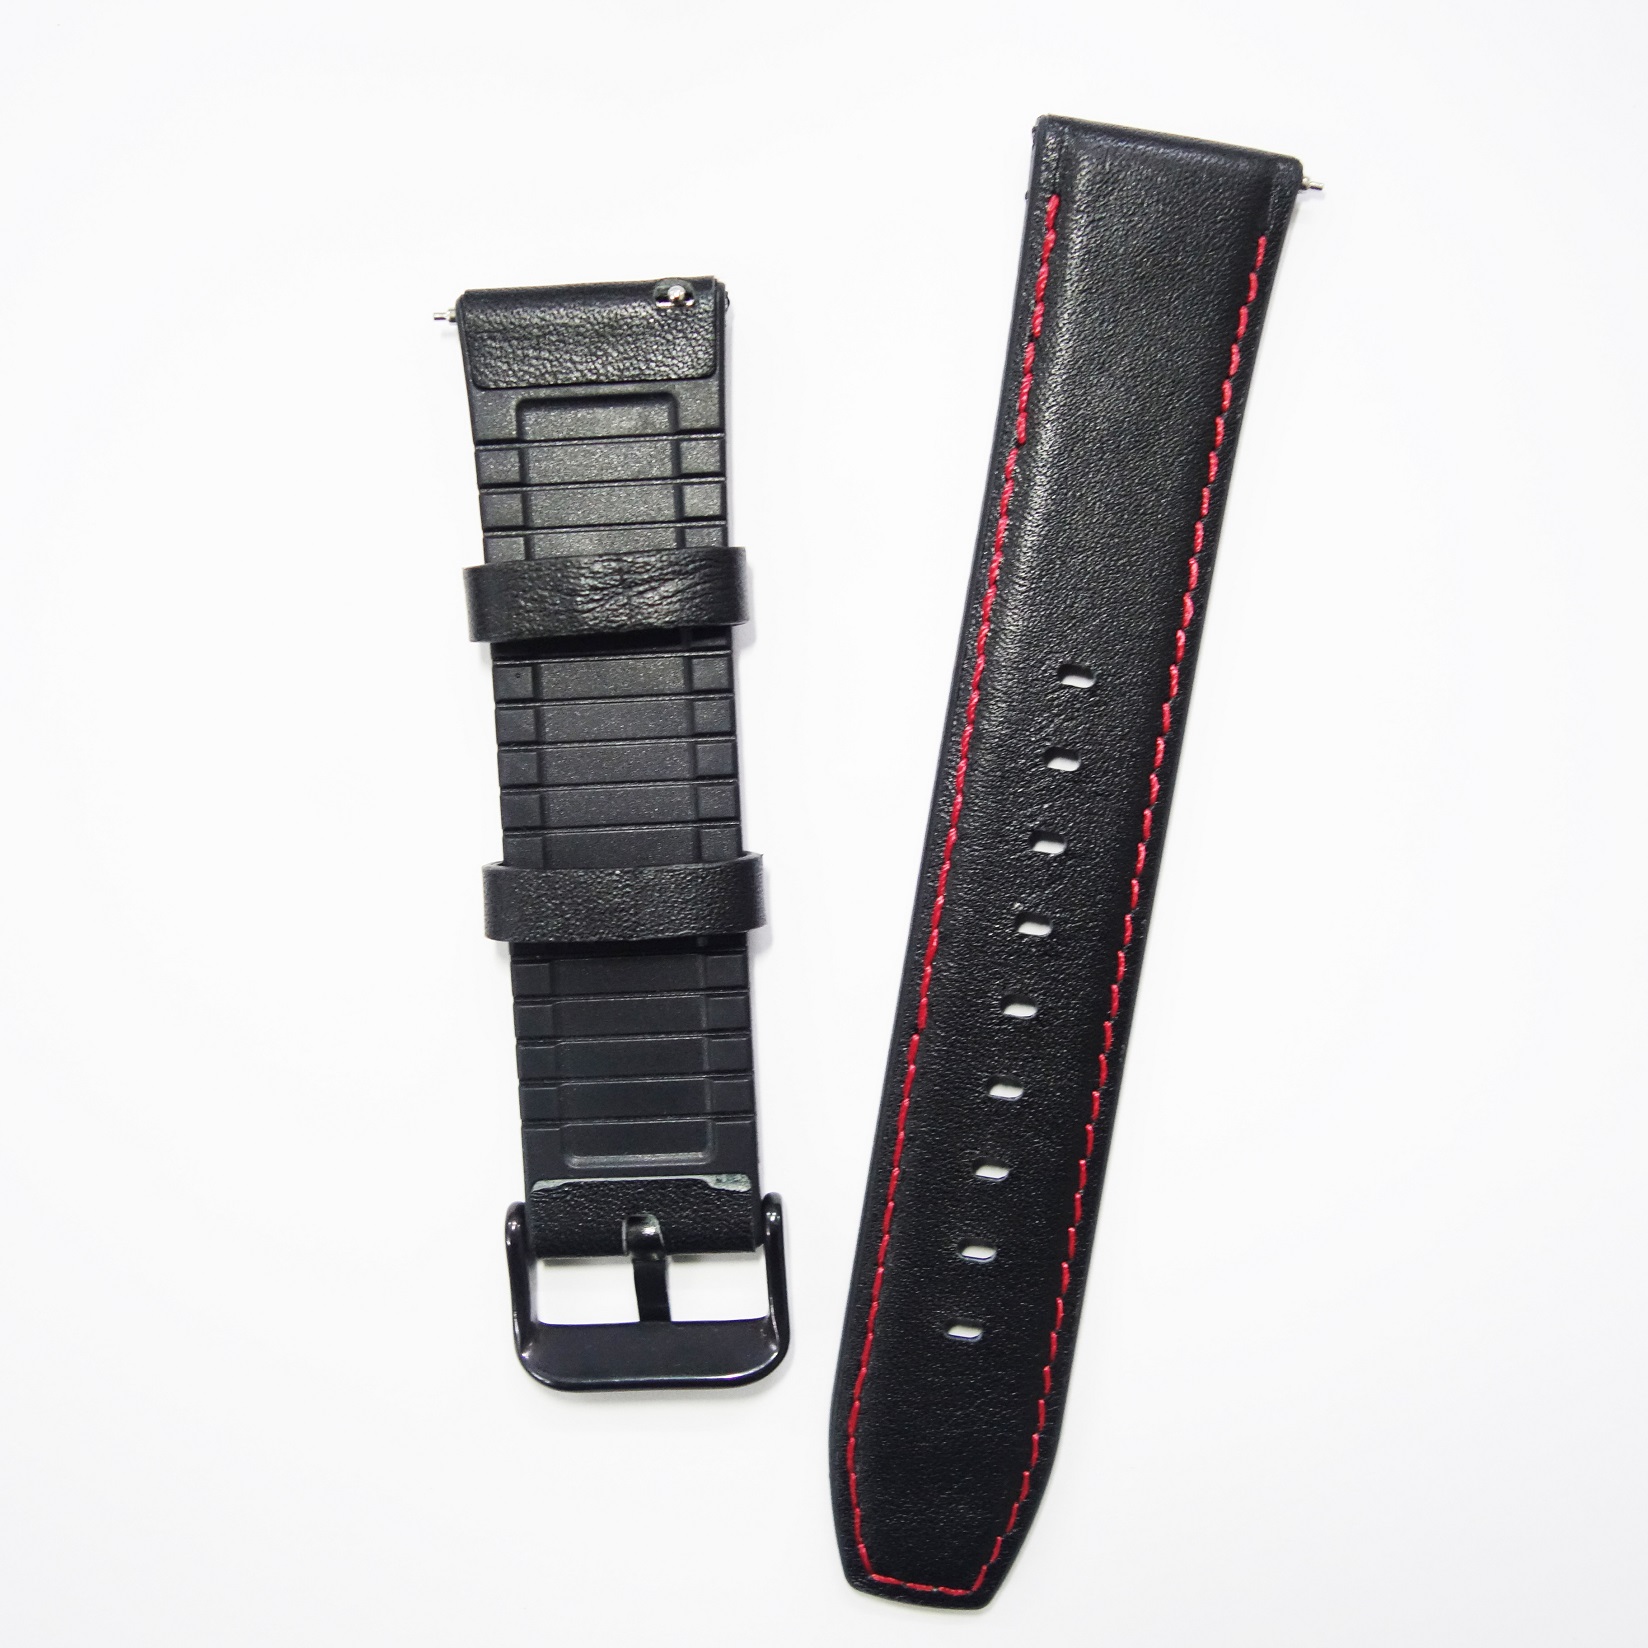 Dây da Hybird Size 22 cho Gear S3, Galaxy Watch Đen